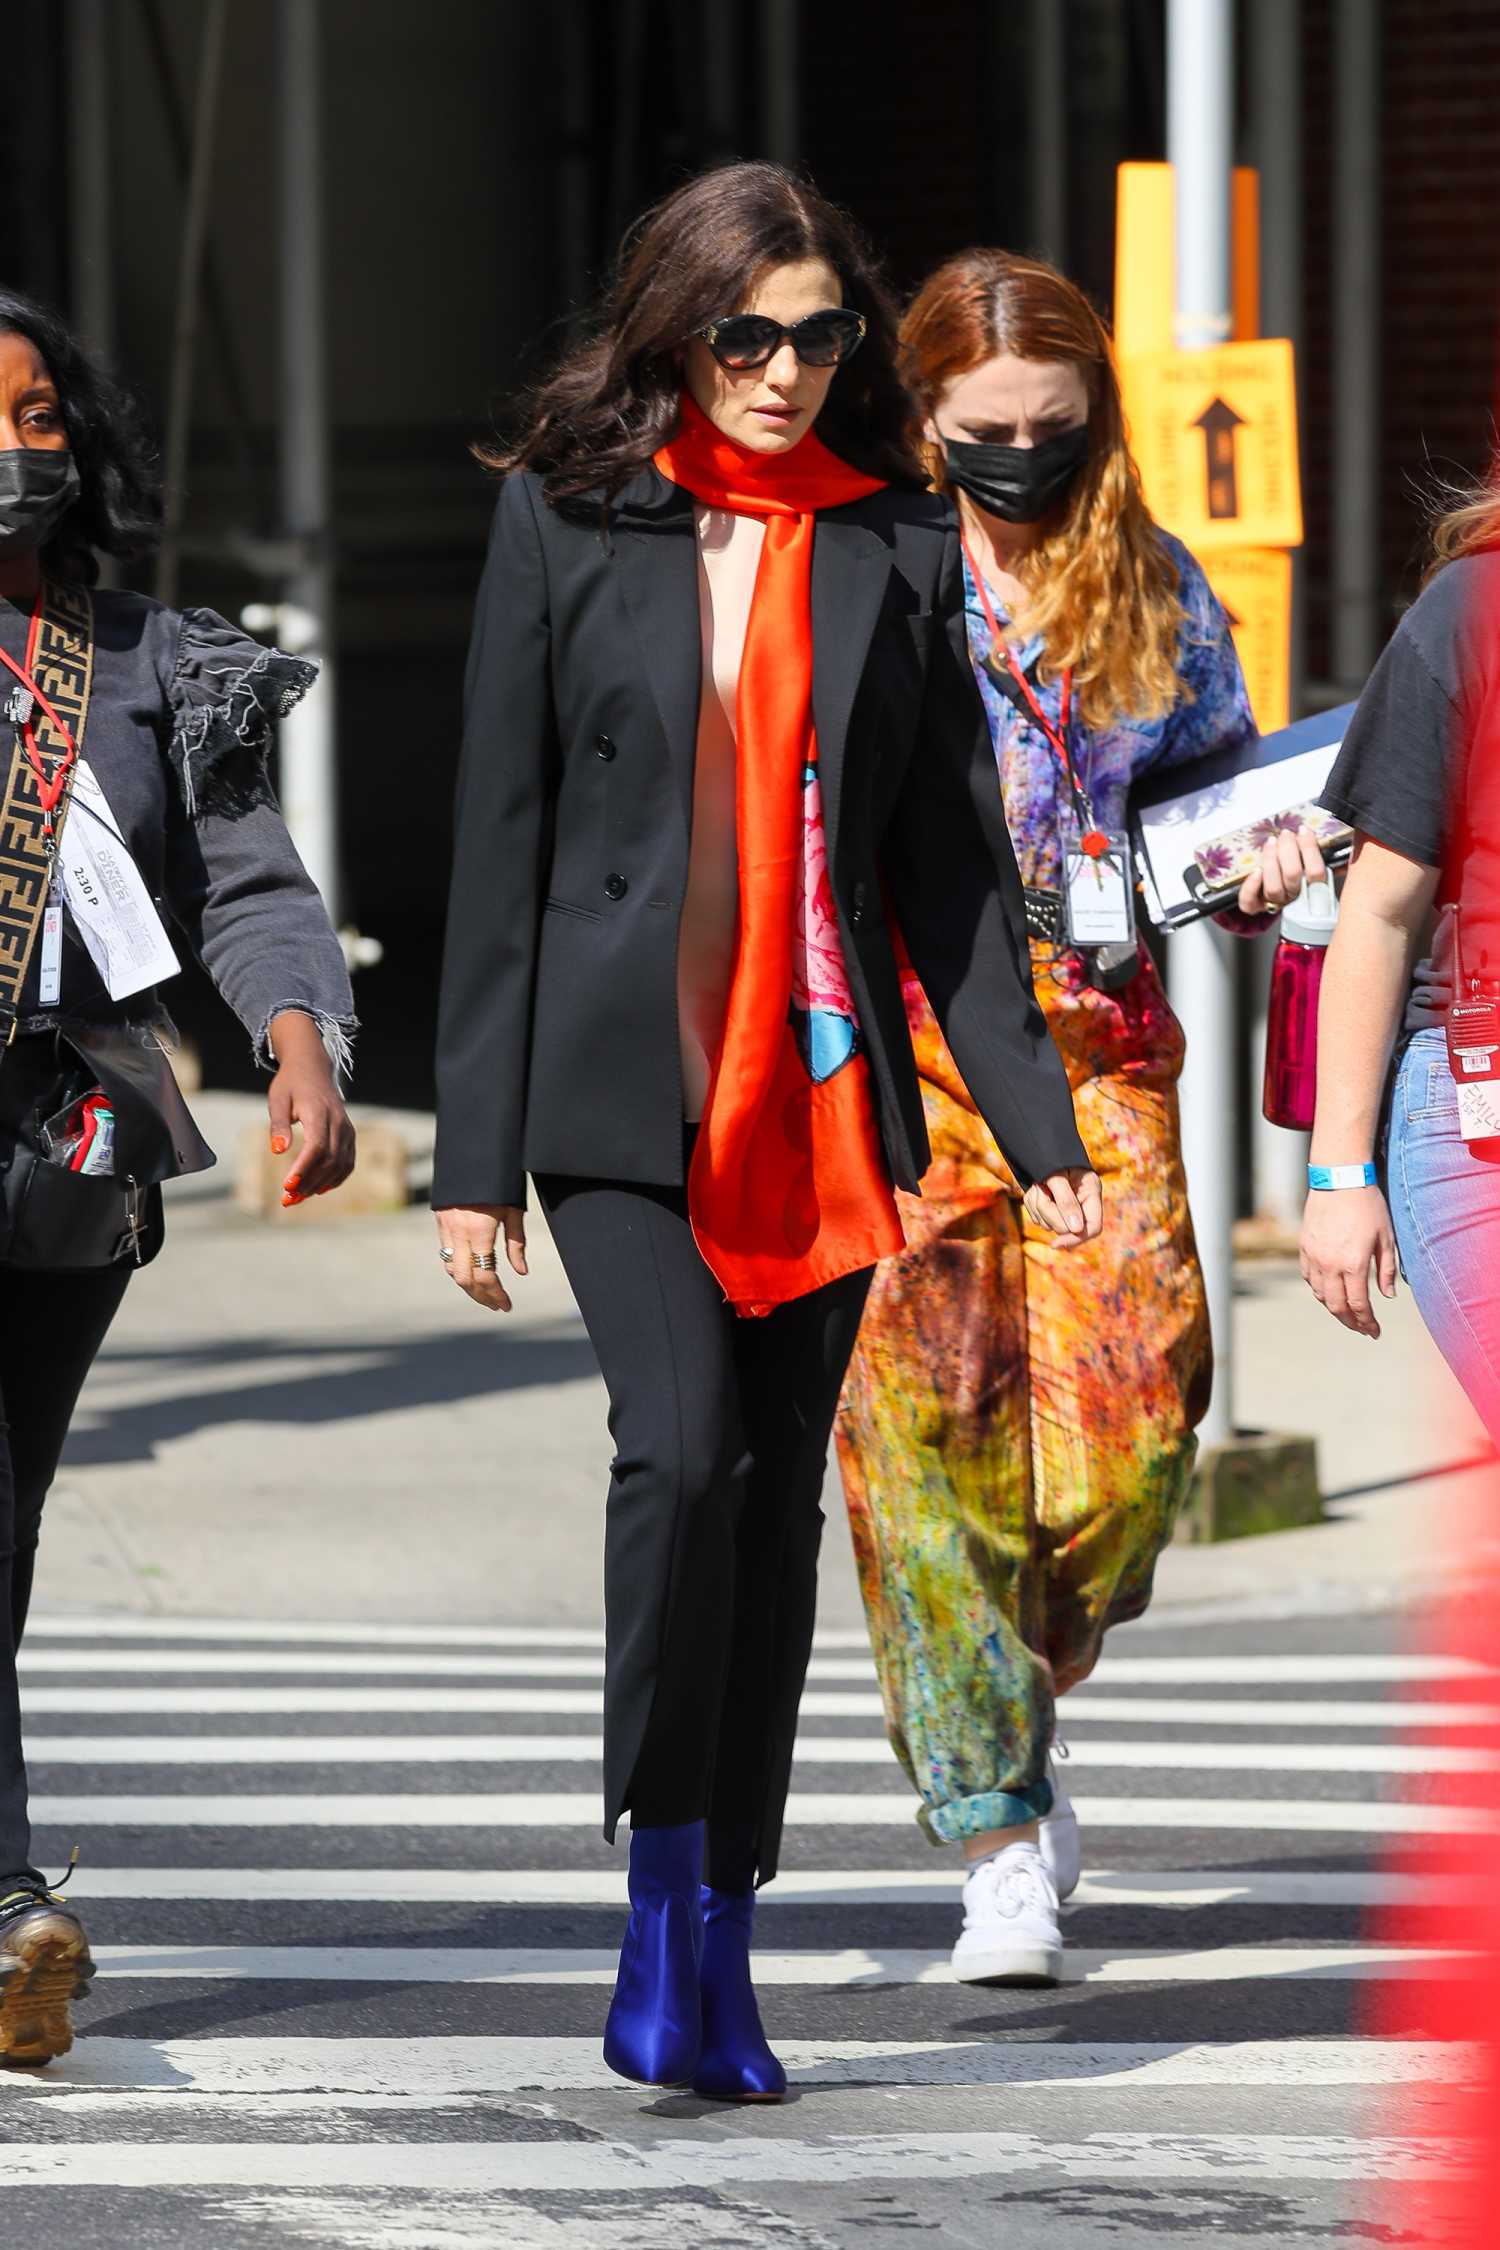 Rachel Weisz in a Black Suit Was Seen Out in Manhattan, NYC – Celeb Donut